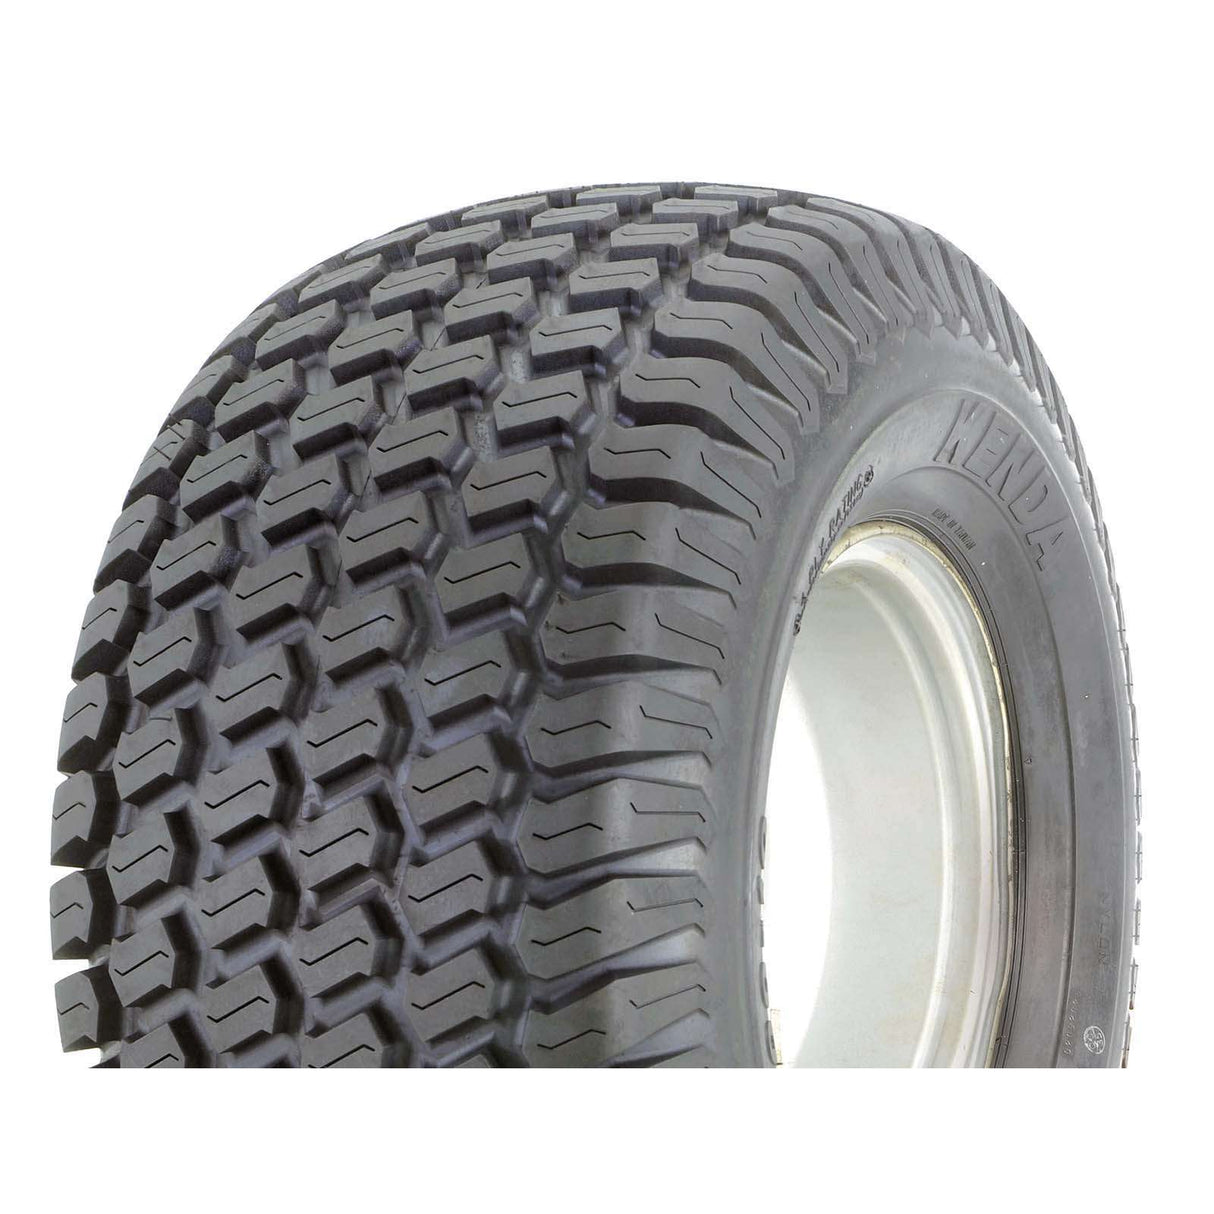 18x8.50-10  K513 (4 PLY) Kenda Commercial Turf Tyre